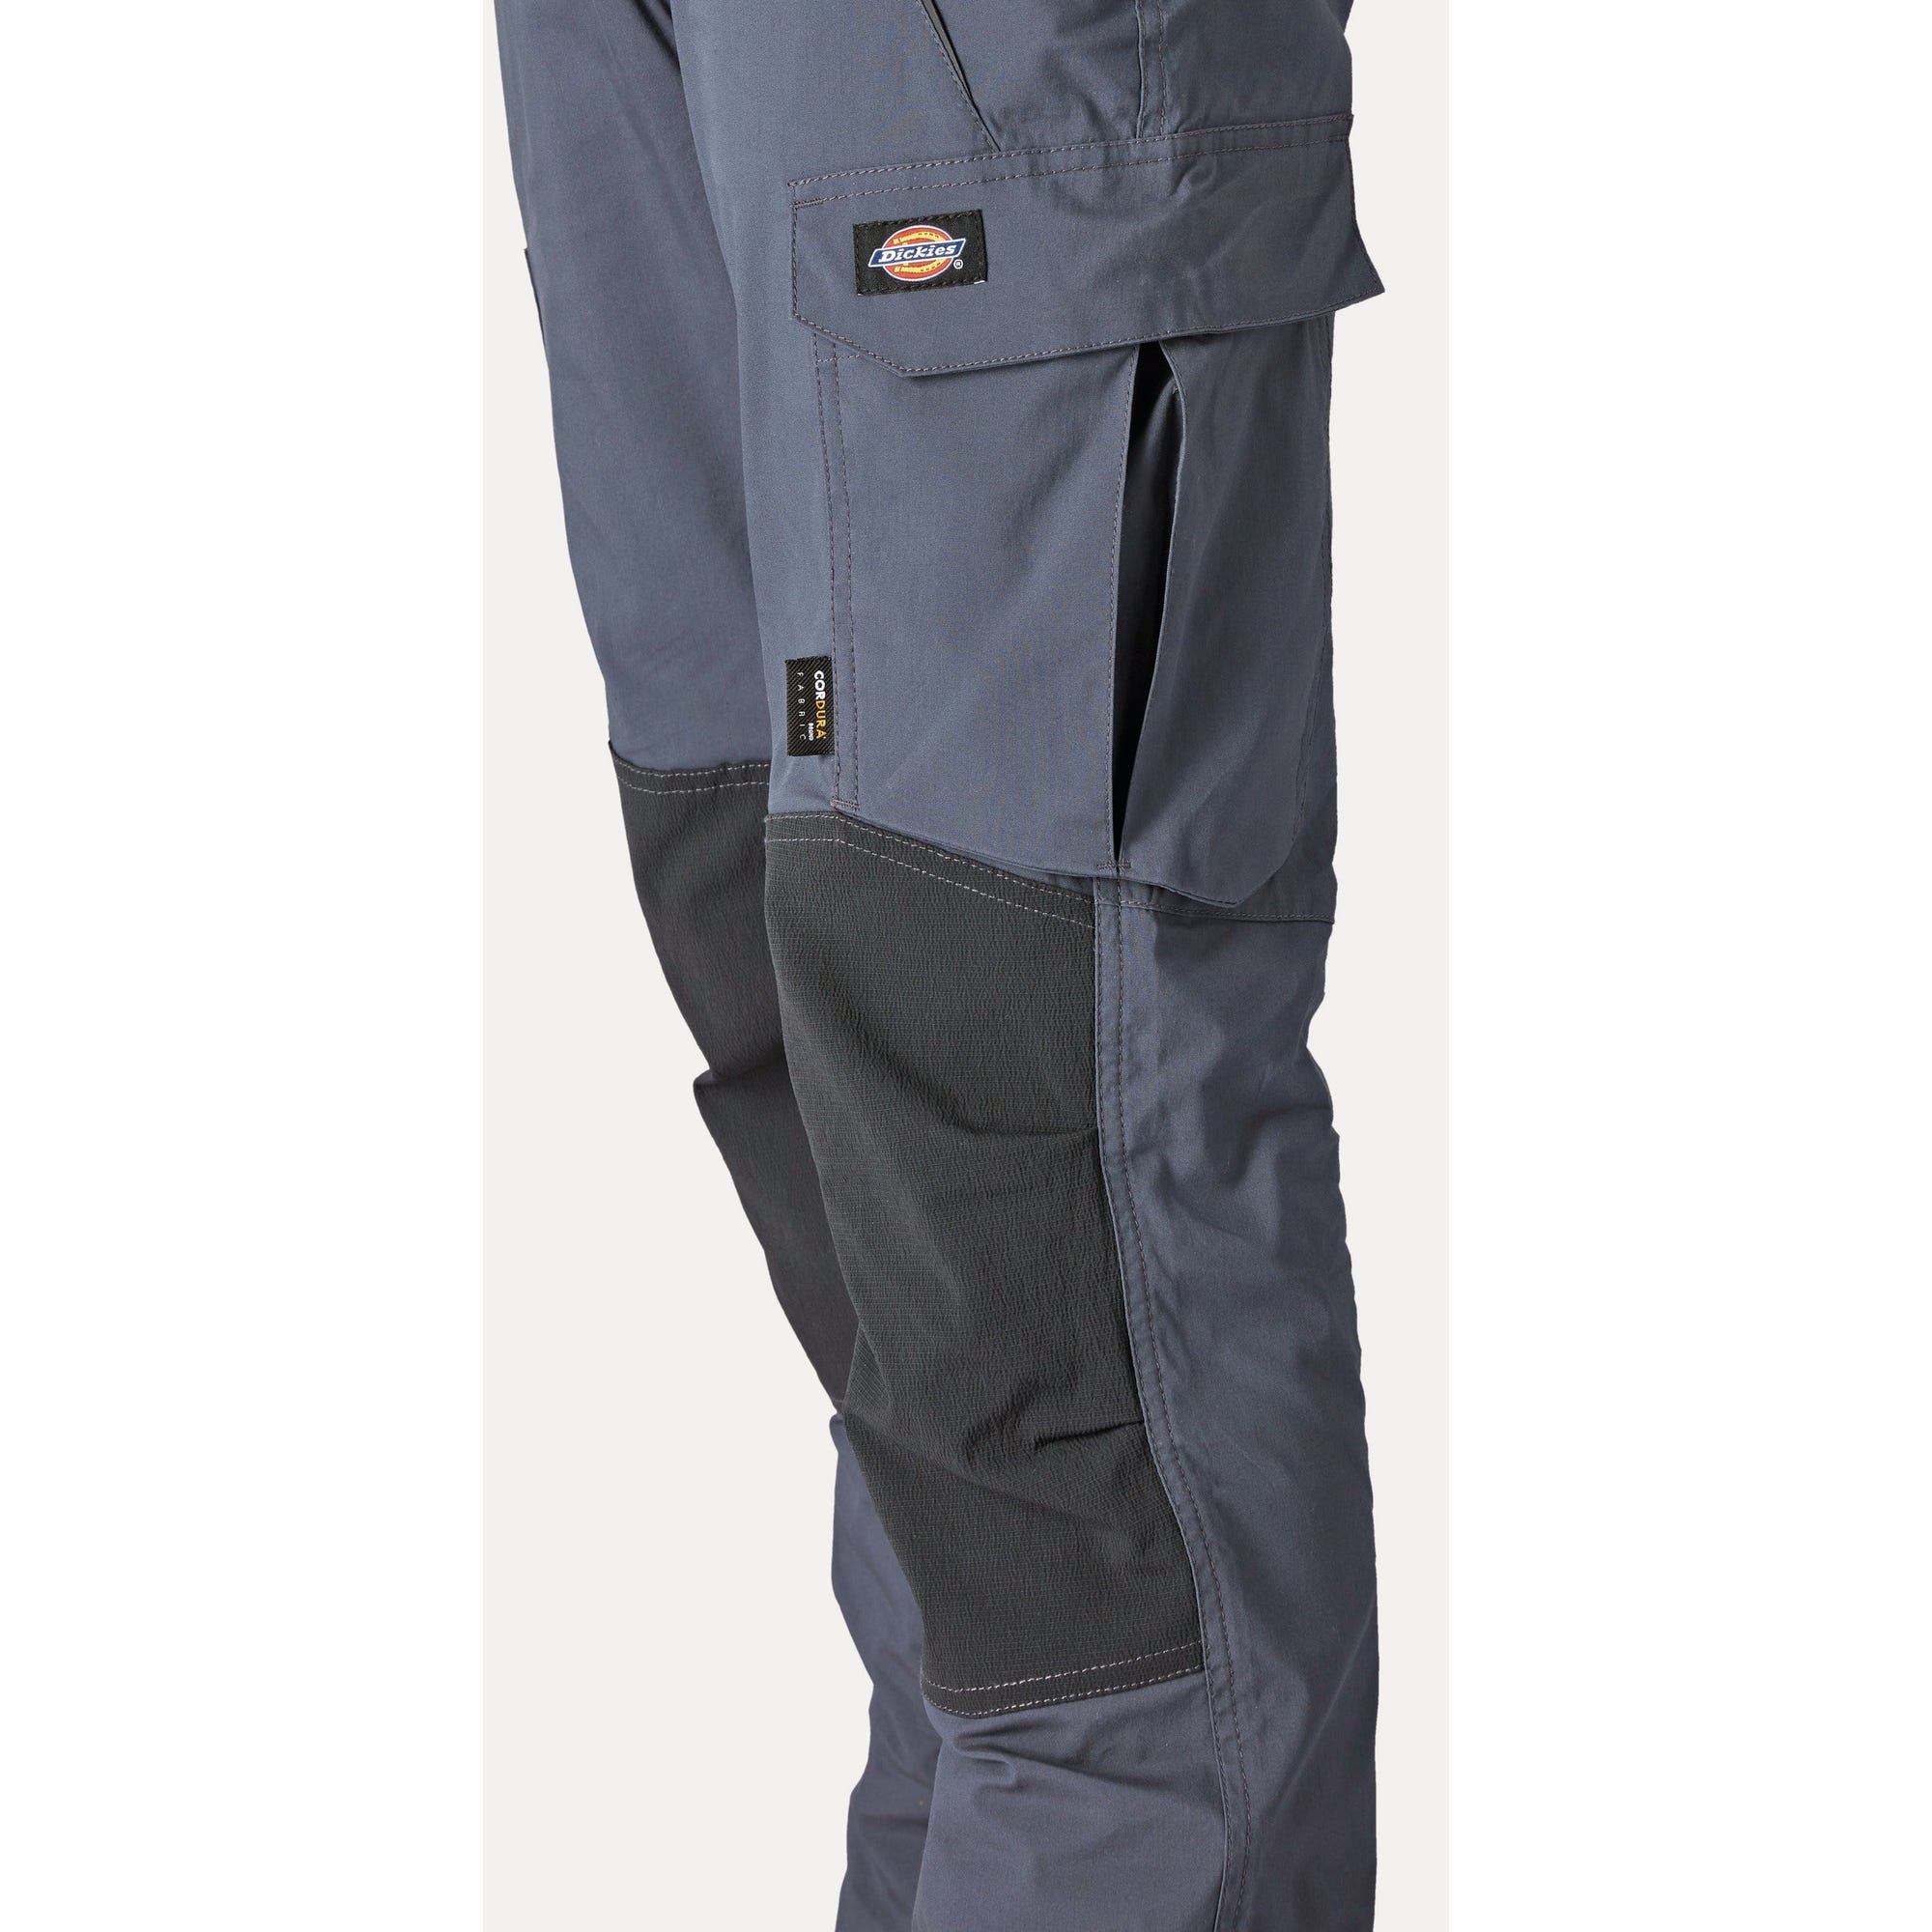 Pantalon léger Flex Gris - Dickies - Taille 52 8